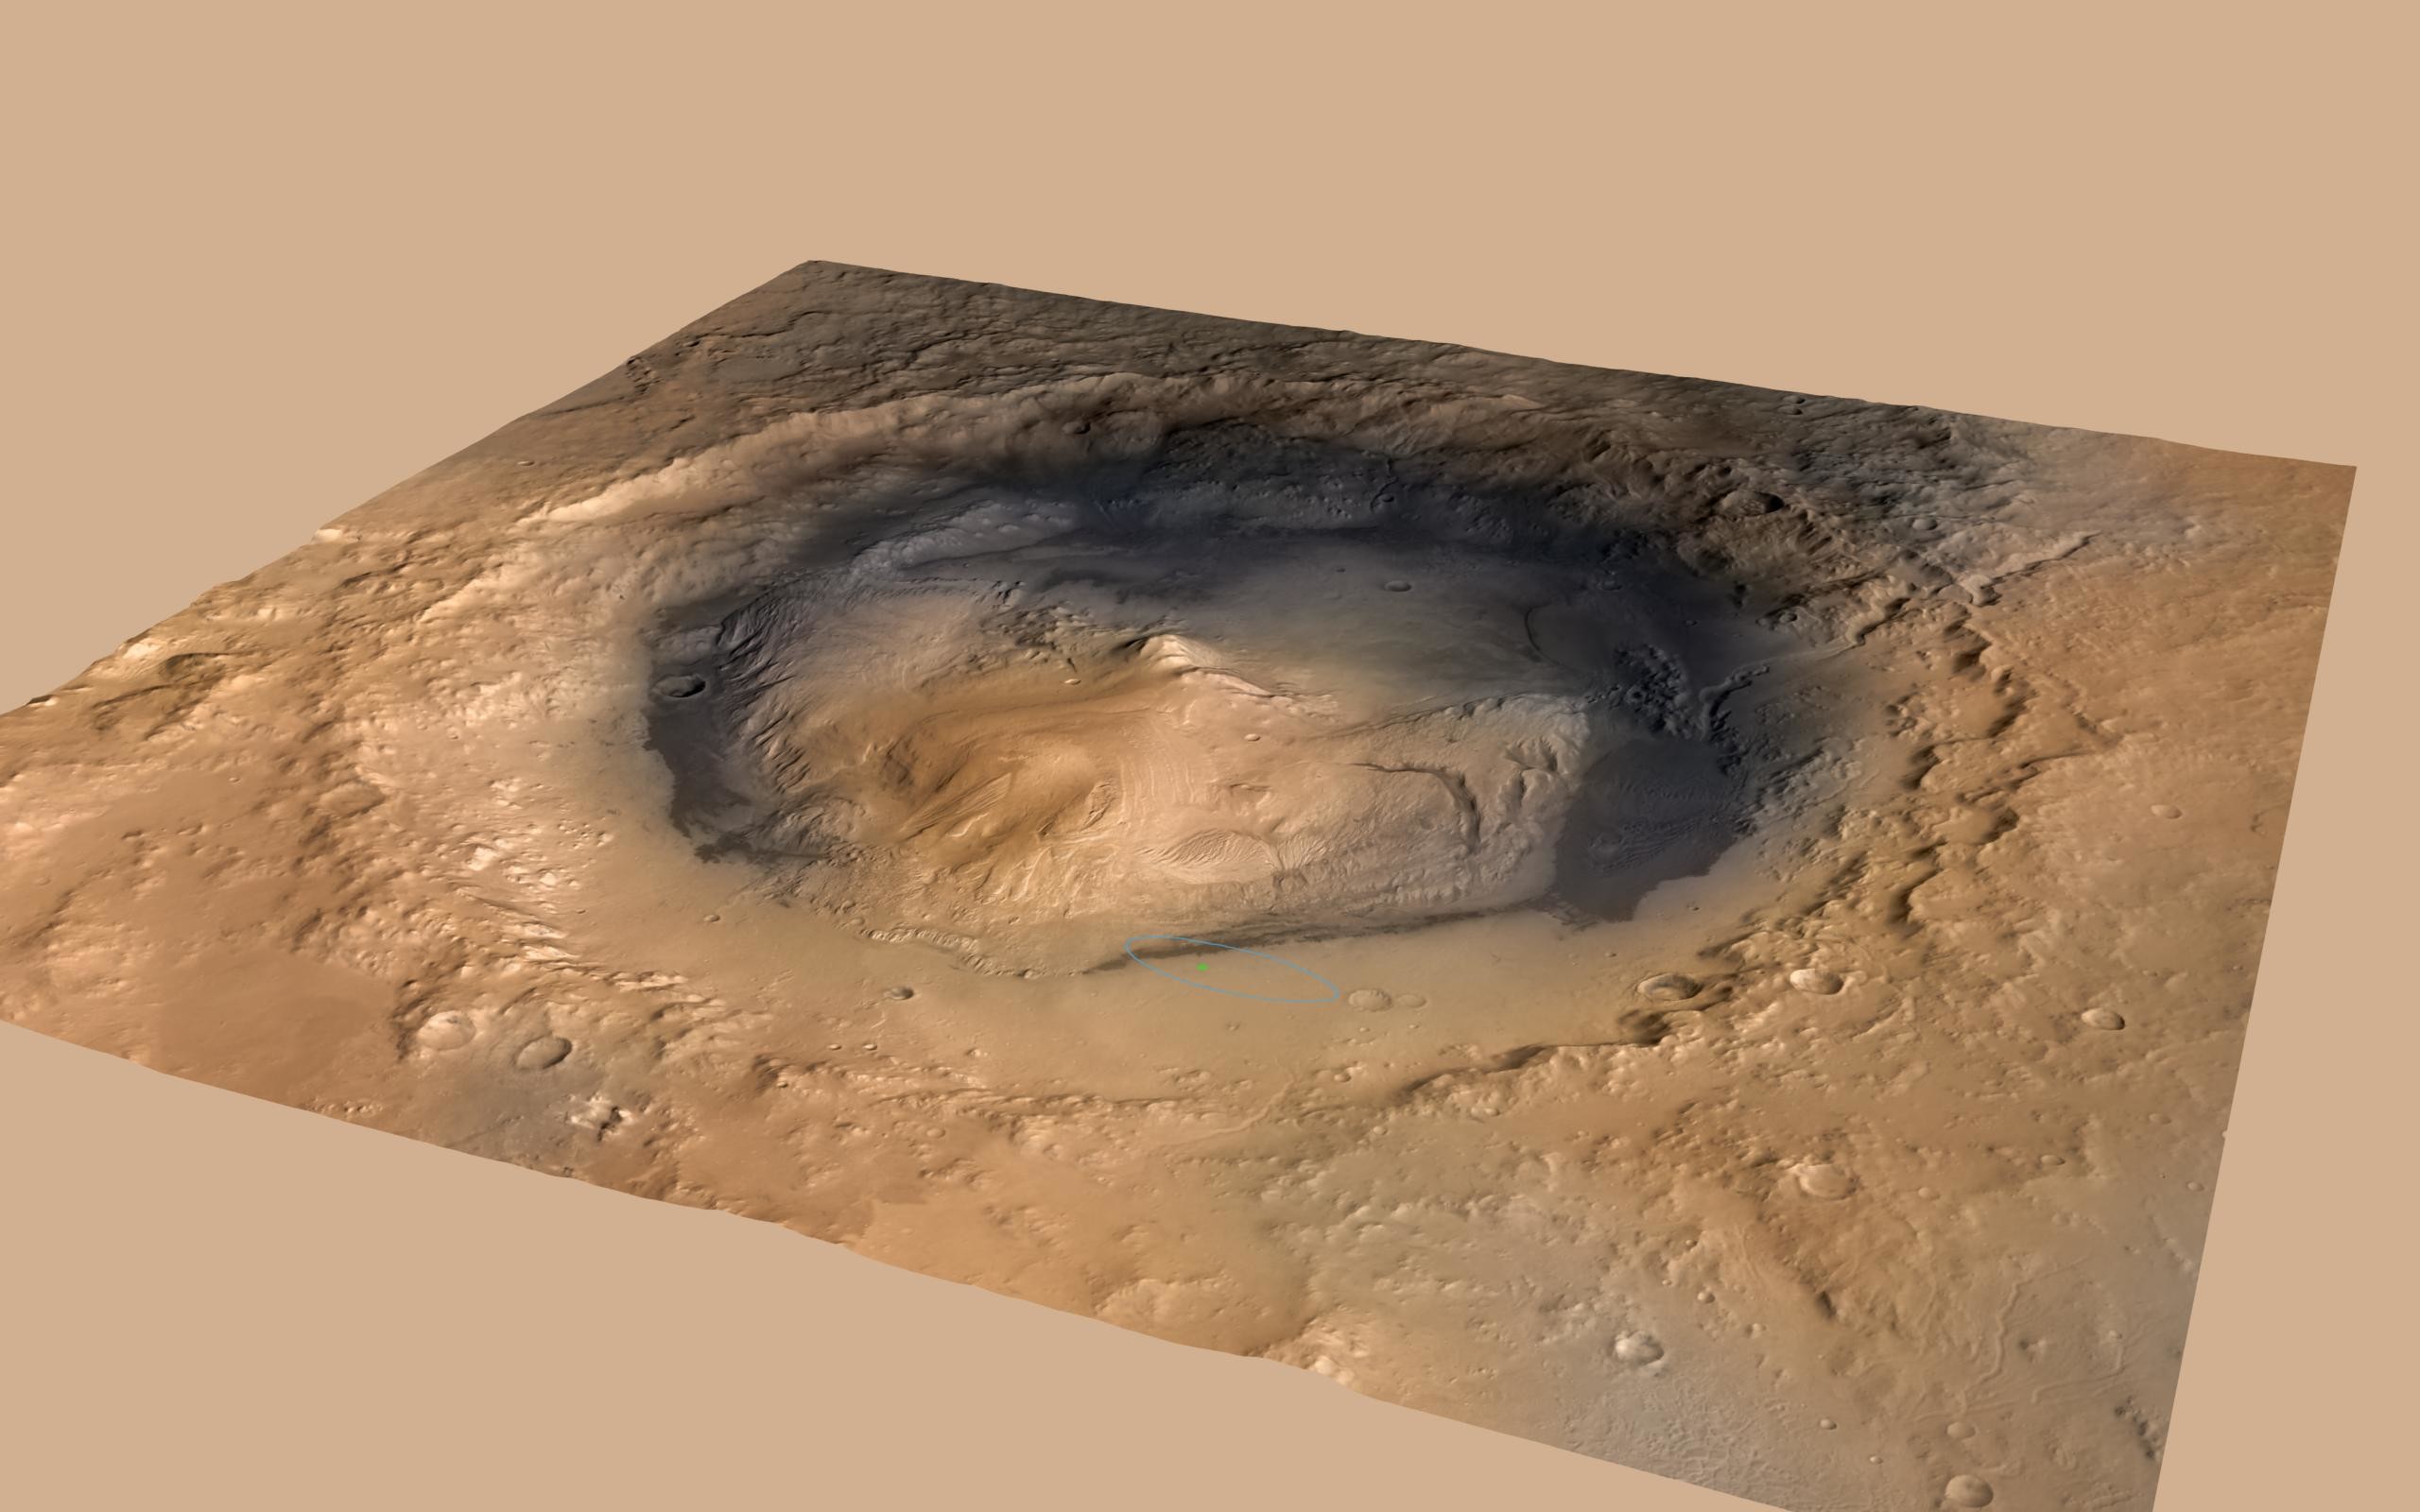 2560x1600 Desktop Wallpaper: Mars as seen by Curiosity